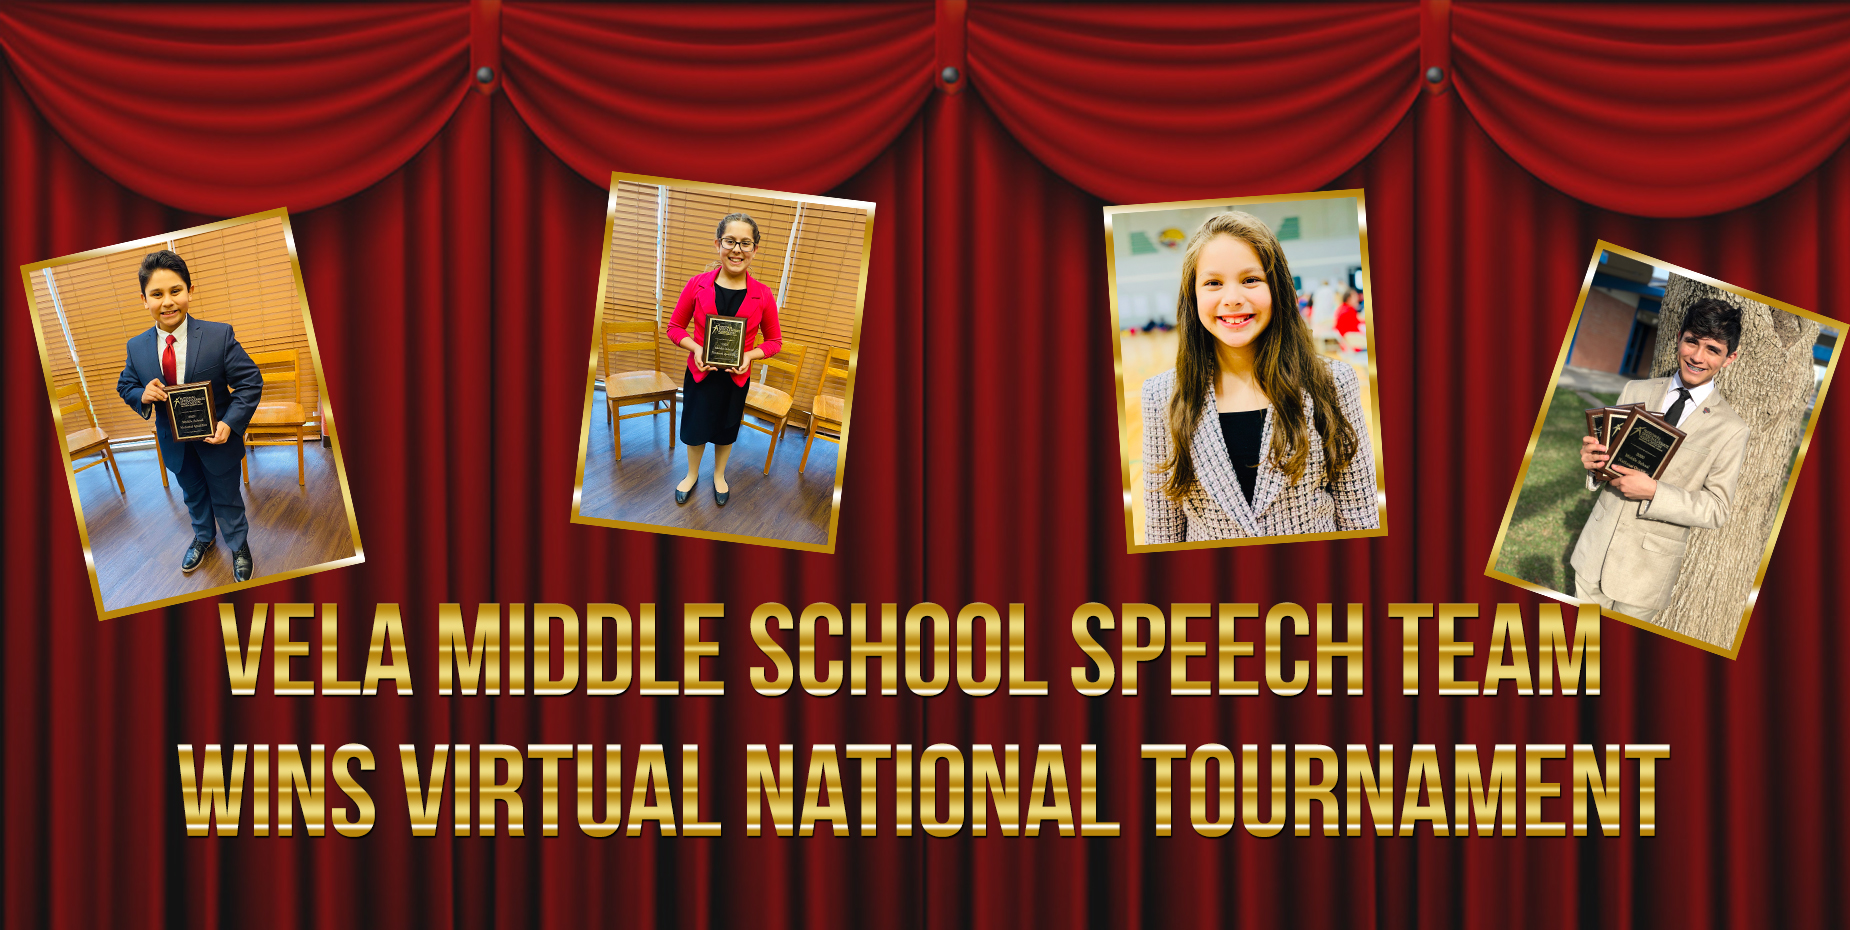 Vela Middle School Speech Team wins virtual national tournament